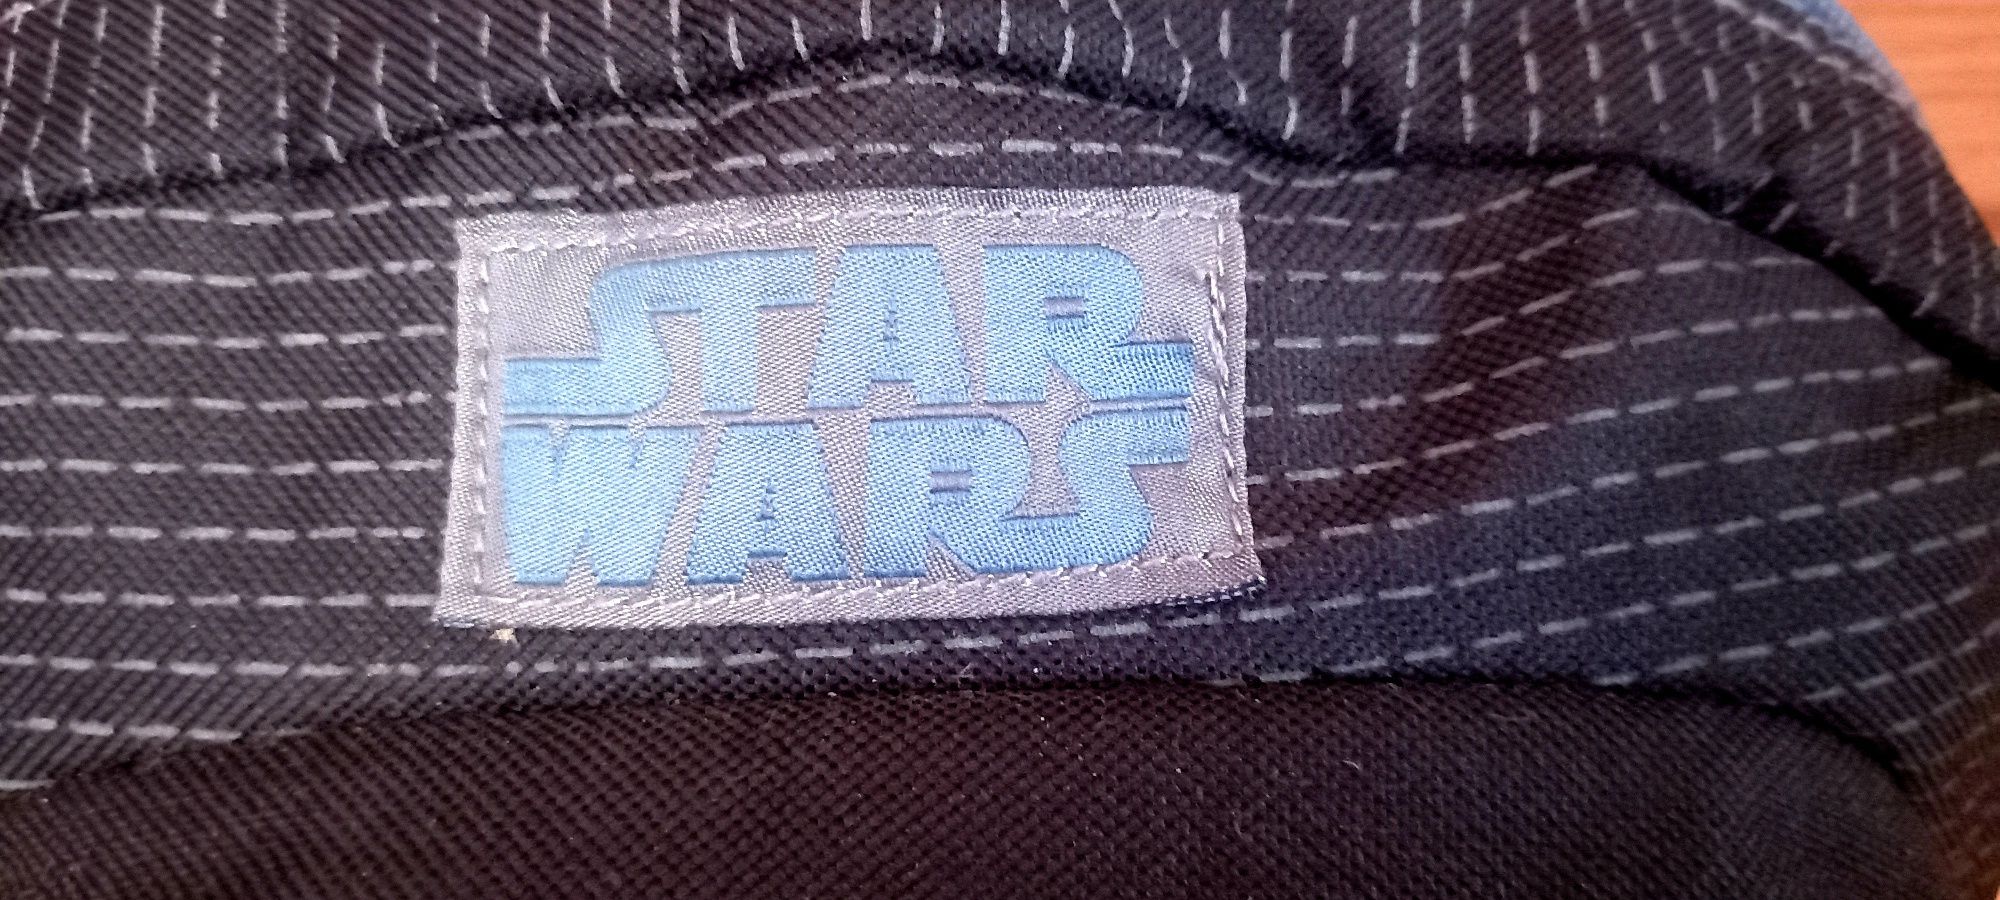 Детский рюкзак "Star Wars"